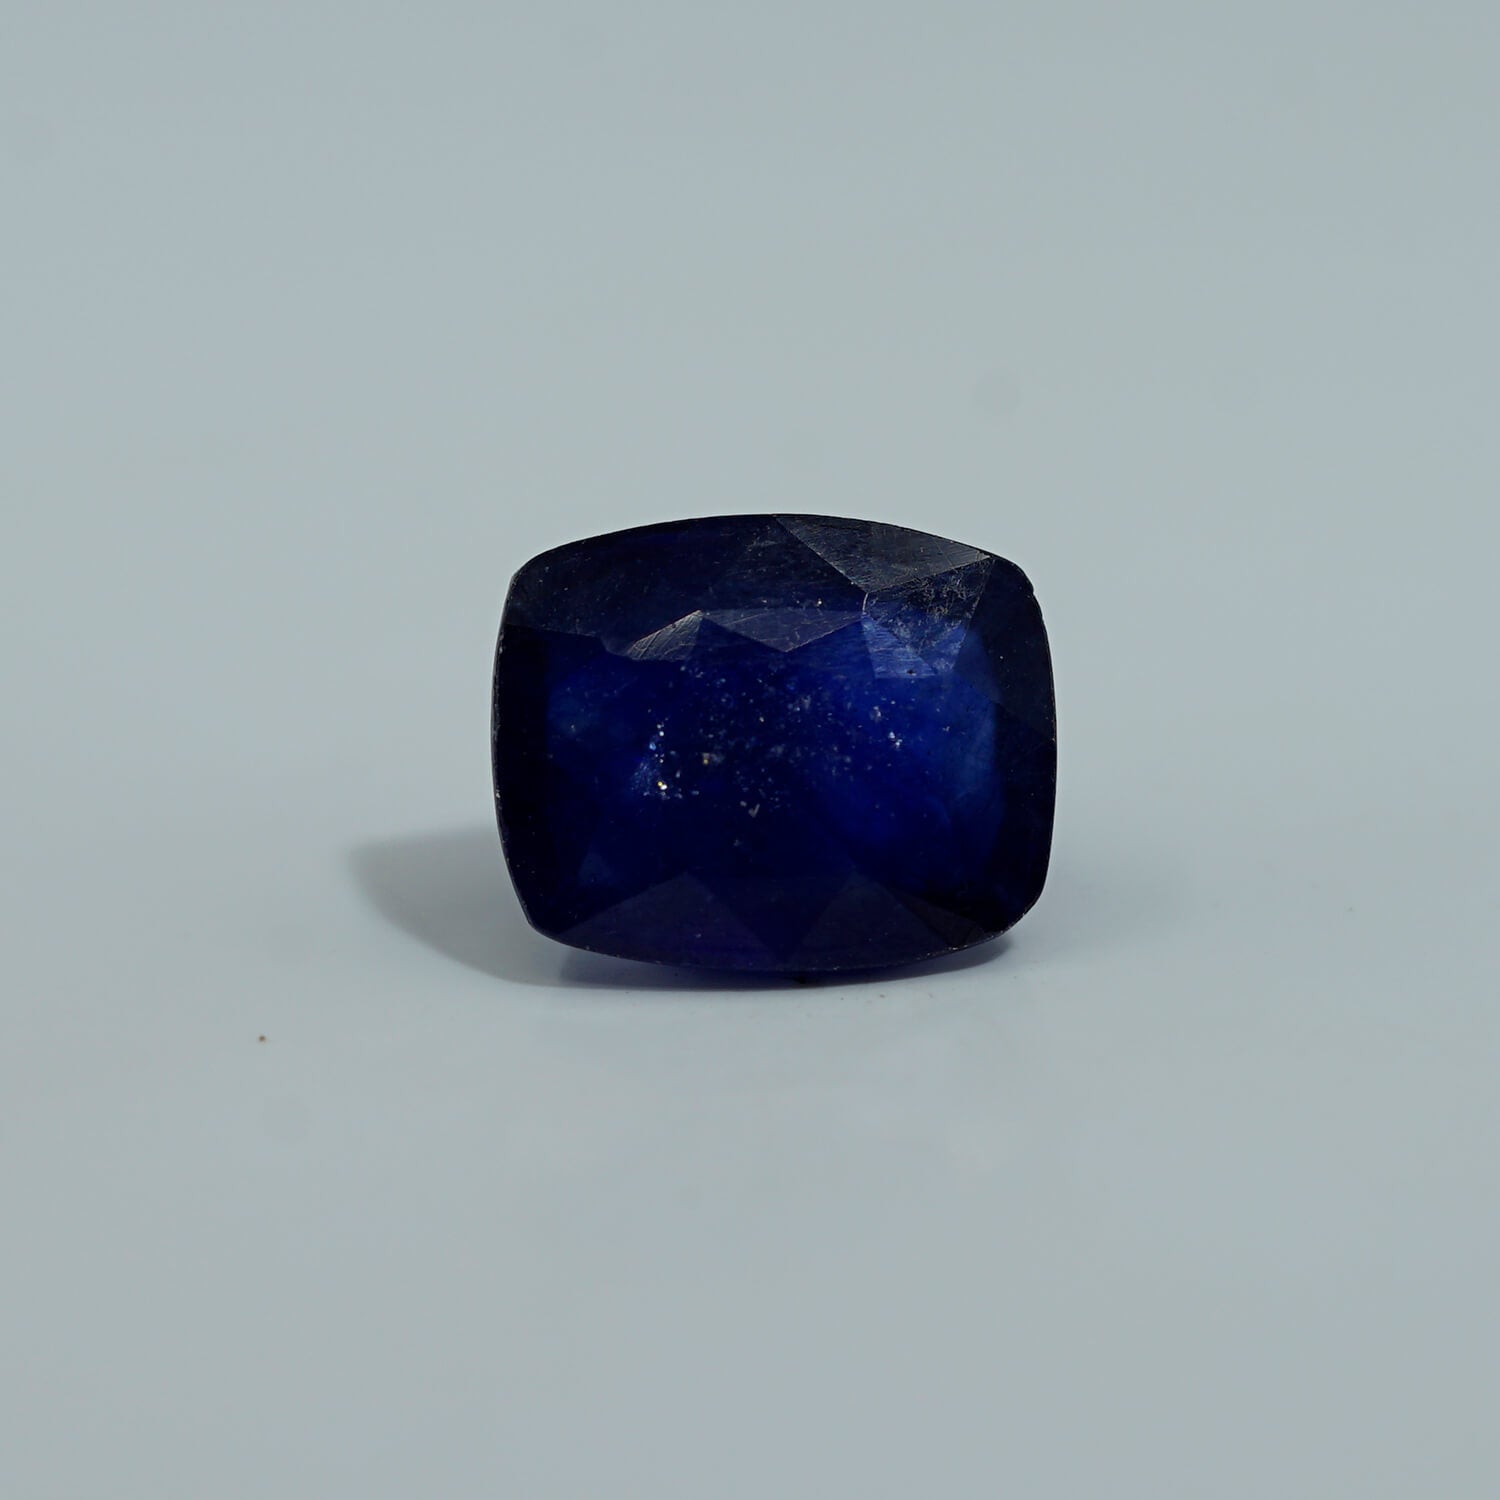 Vedic Crystals Blue sapphire gemstone (neelam nag) stone 5 ratti best price image 4568